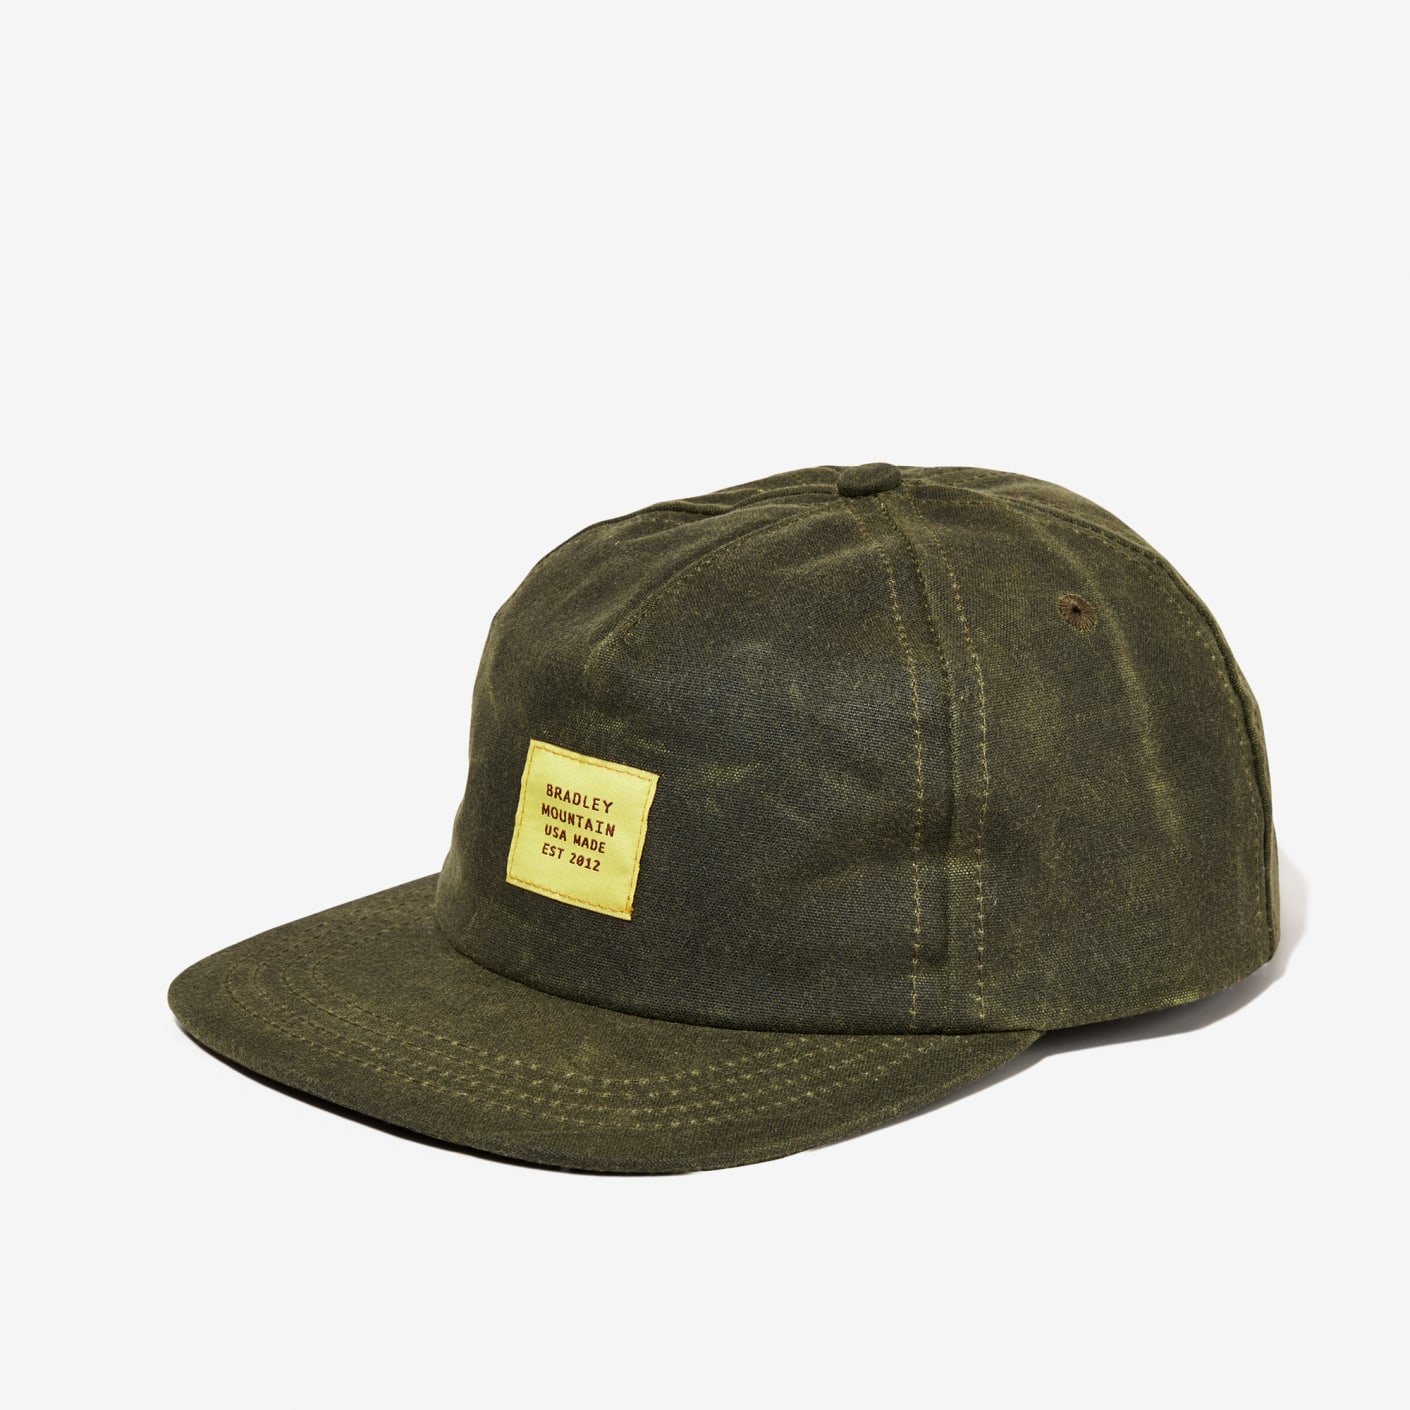 Bradley Mountain Heritage Camper Hat | Bespoke Post